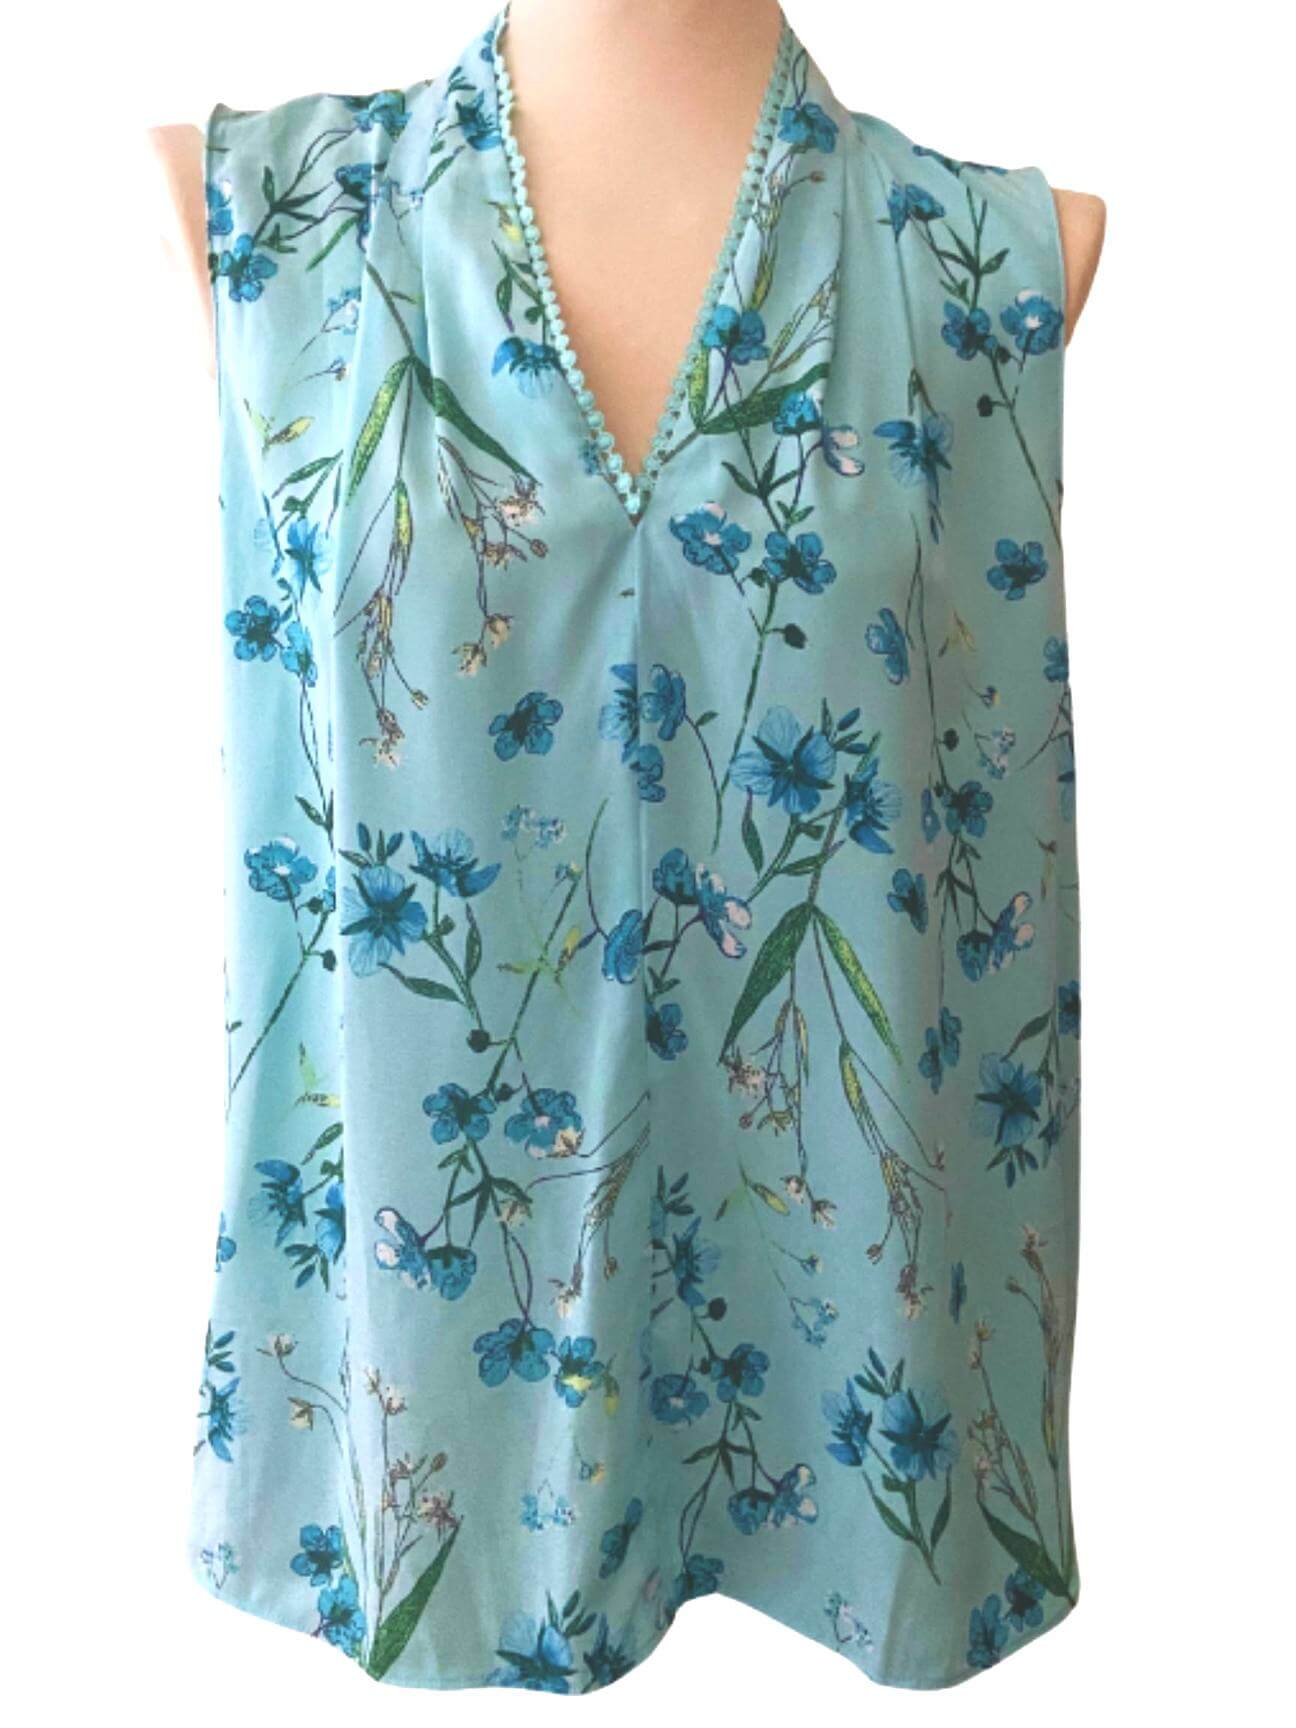 Cool Summer TAHARI sleeveless floral blouse